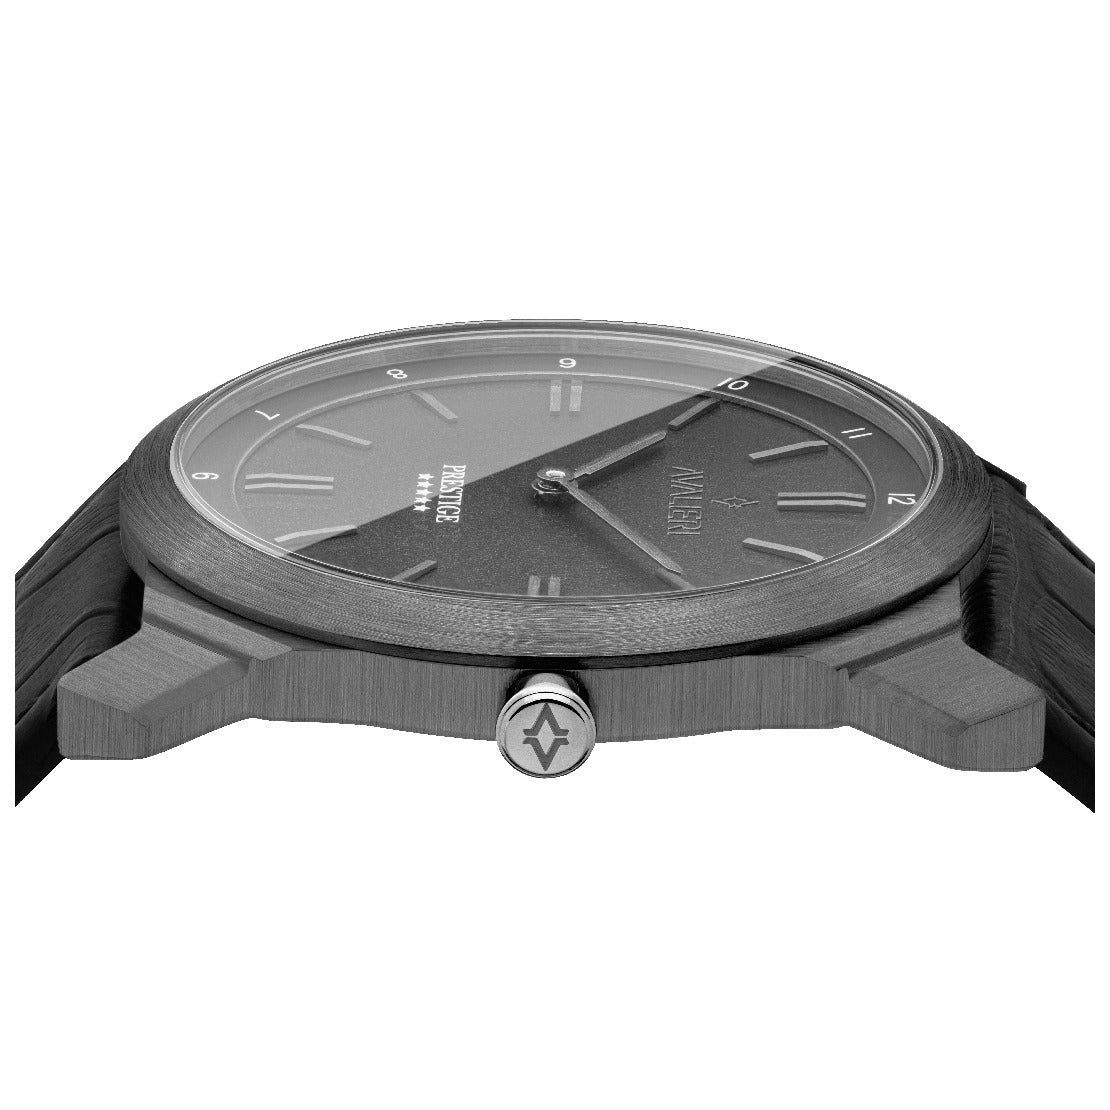 Avalieri Prestige Men's Watch, Swiss Quartz Movement, Gray Dial - AP-0103